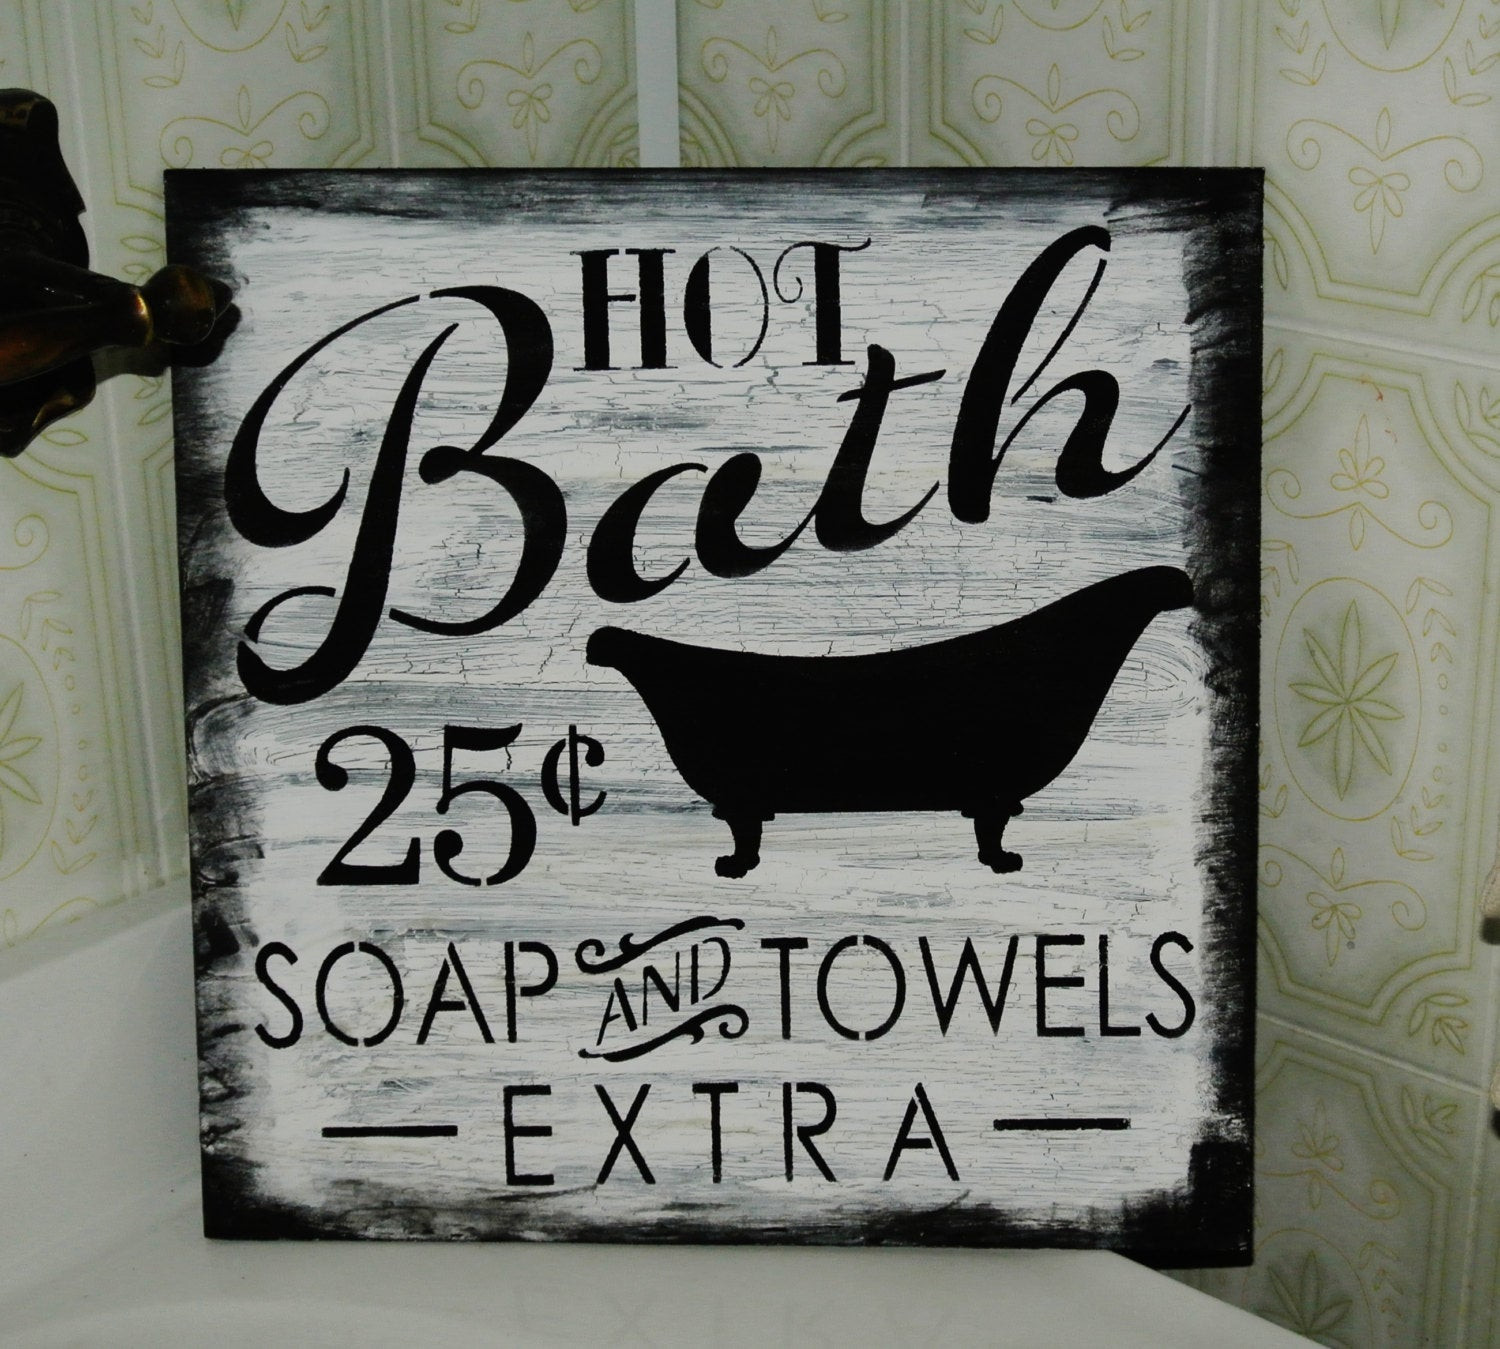 Bathroom Decor Signs
 Bath Sign Hot bath 25 cents white and black bathroom decor